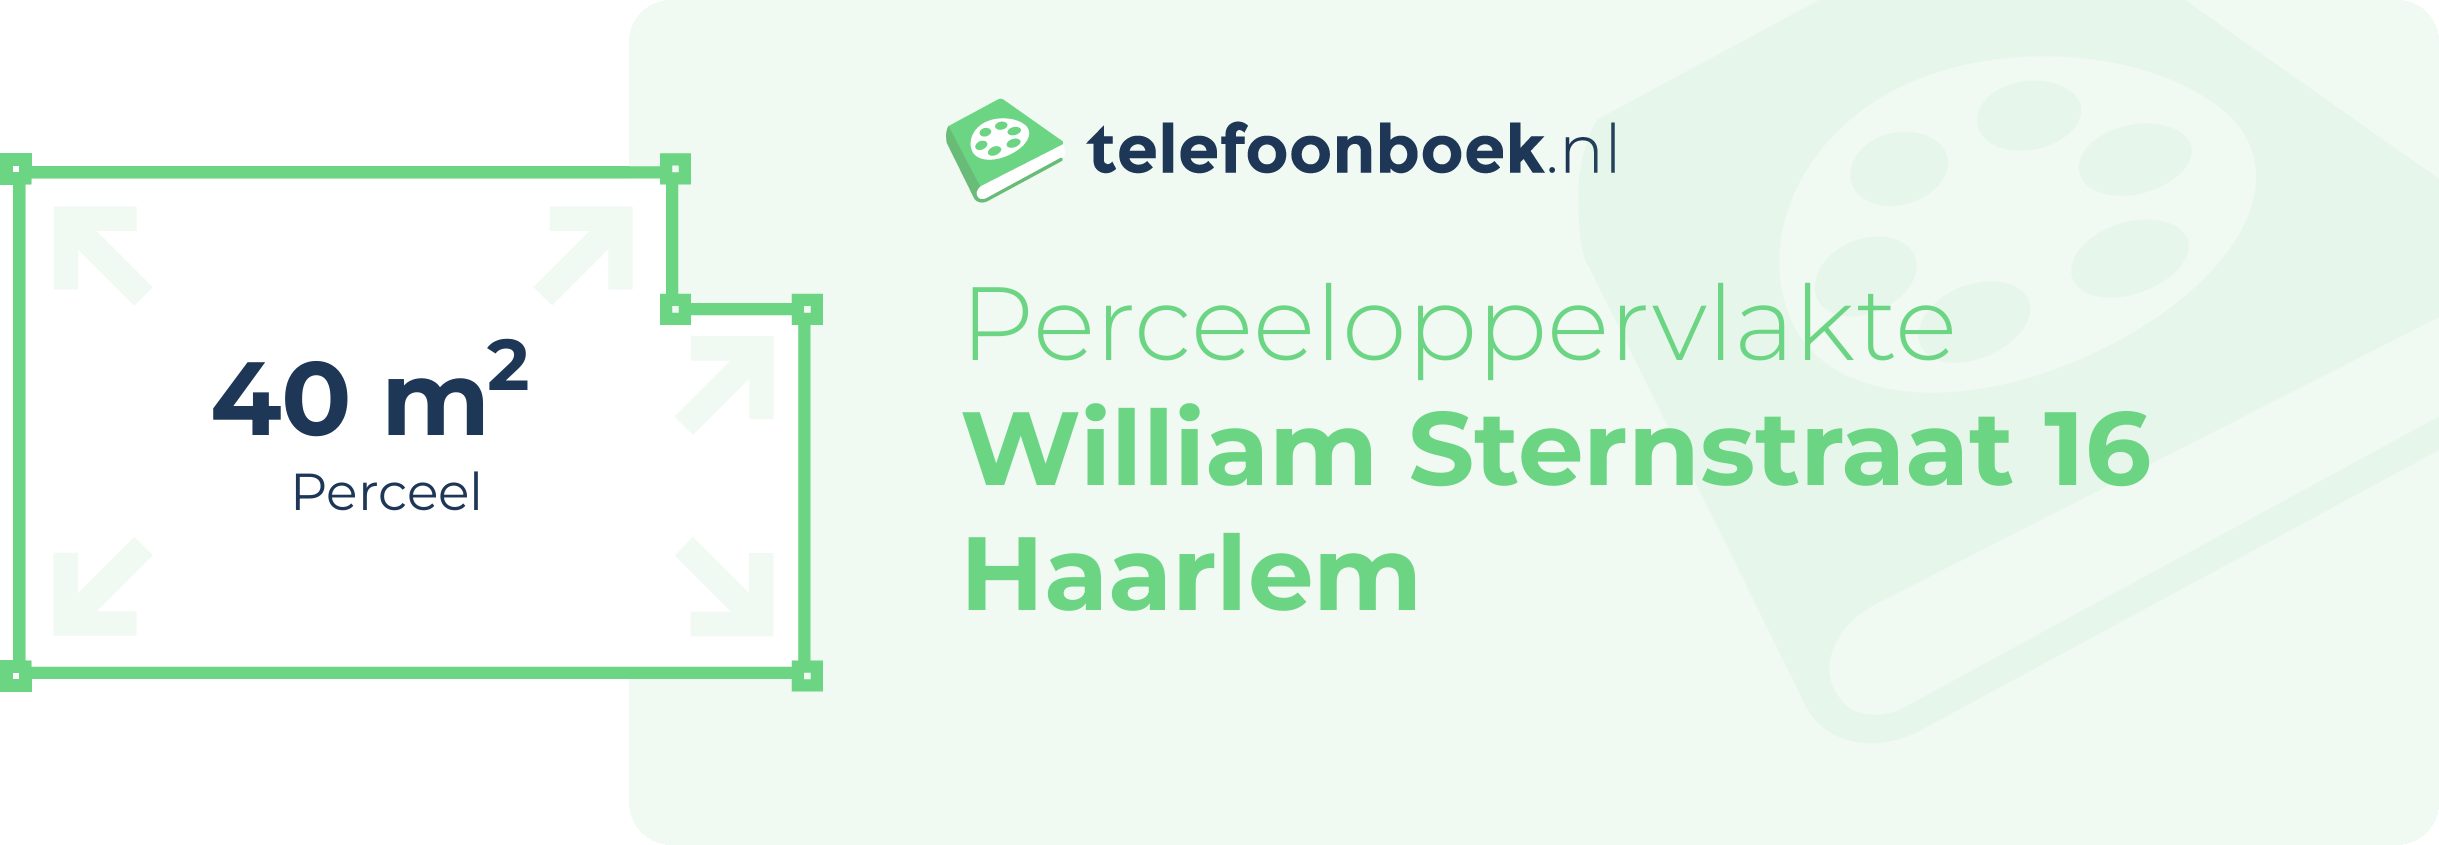 Perceeloppervlakte William Sternstraat 16 Haarlem